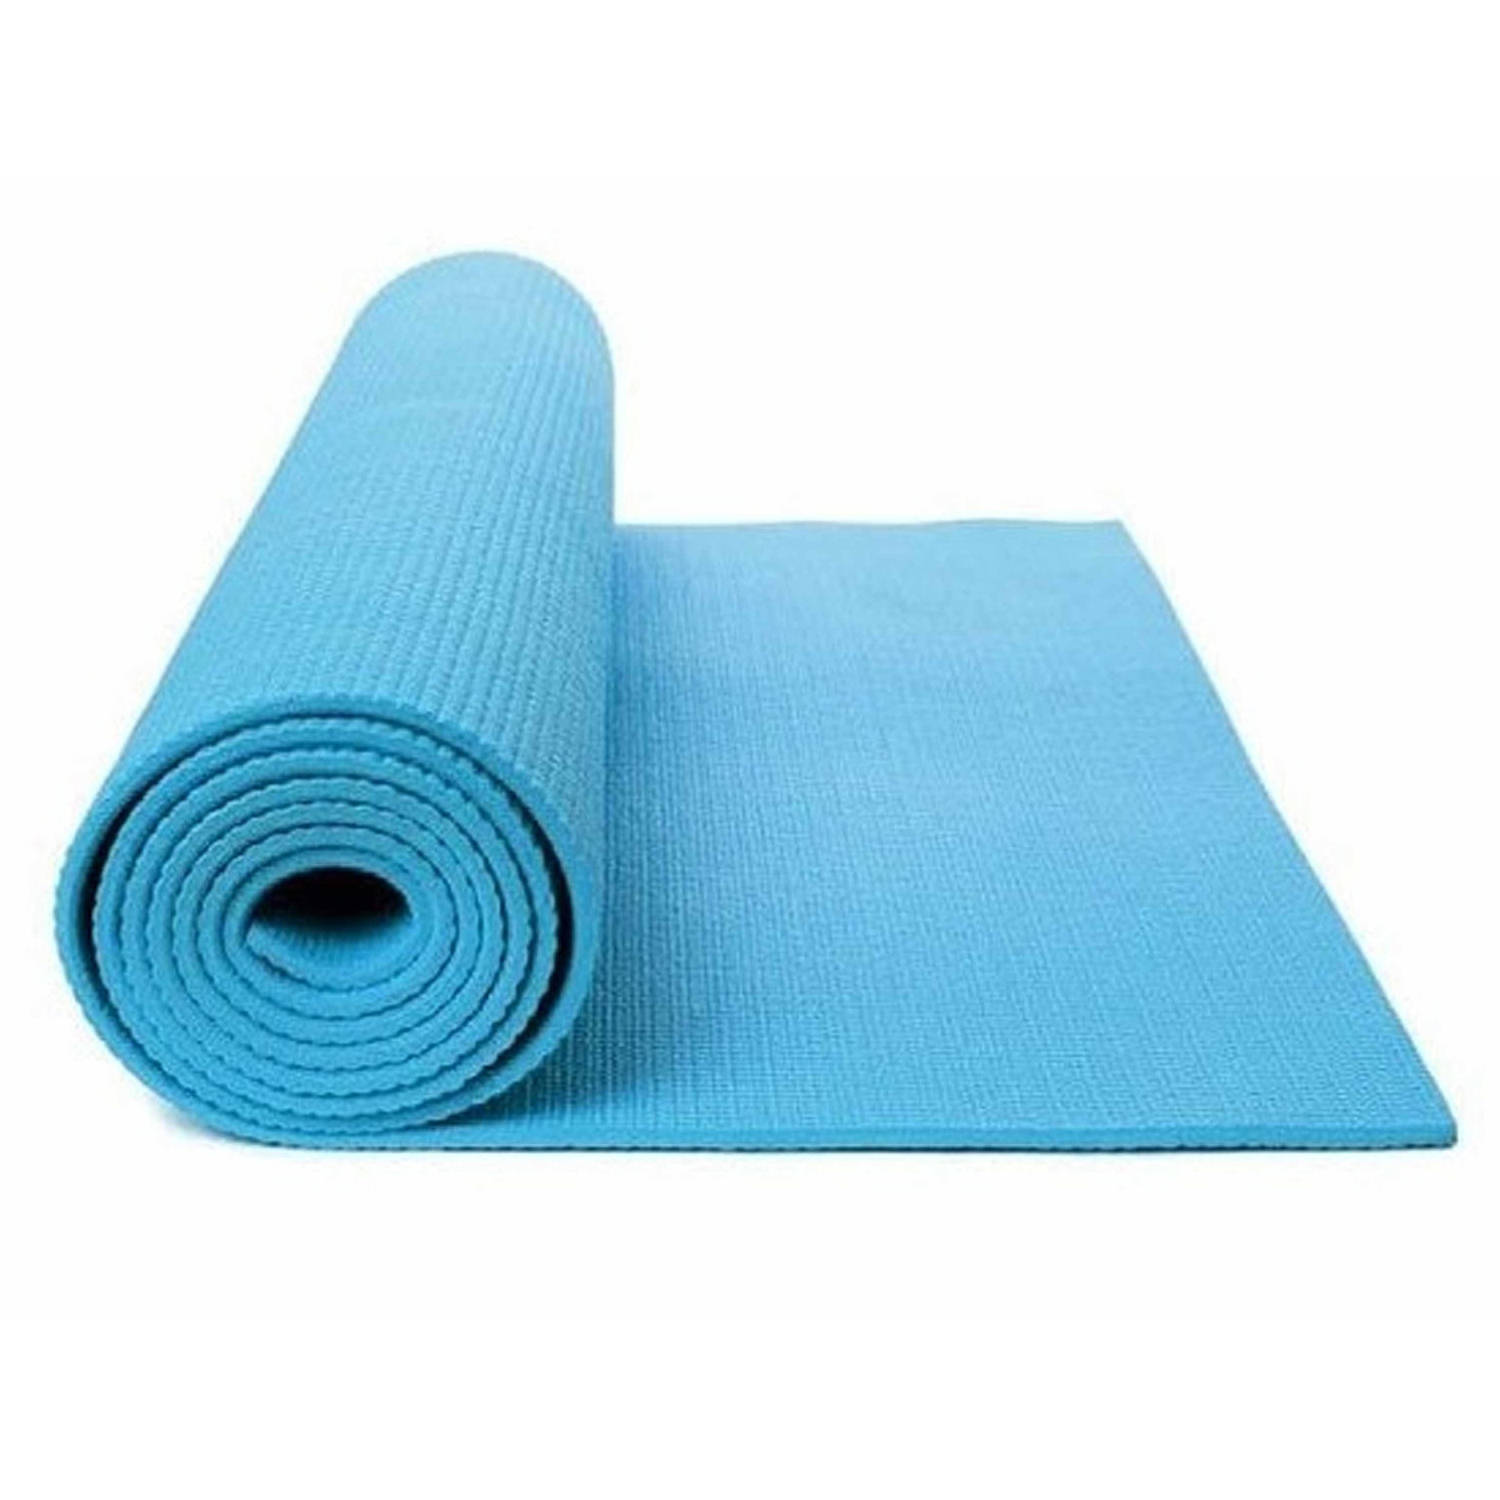 Lichtblauwe Yogamat-sportmat 180 X 60 Cm Sportmatten Voor O.a. Yoga, Pilates En Fitness